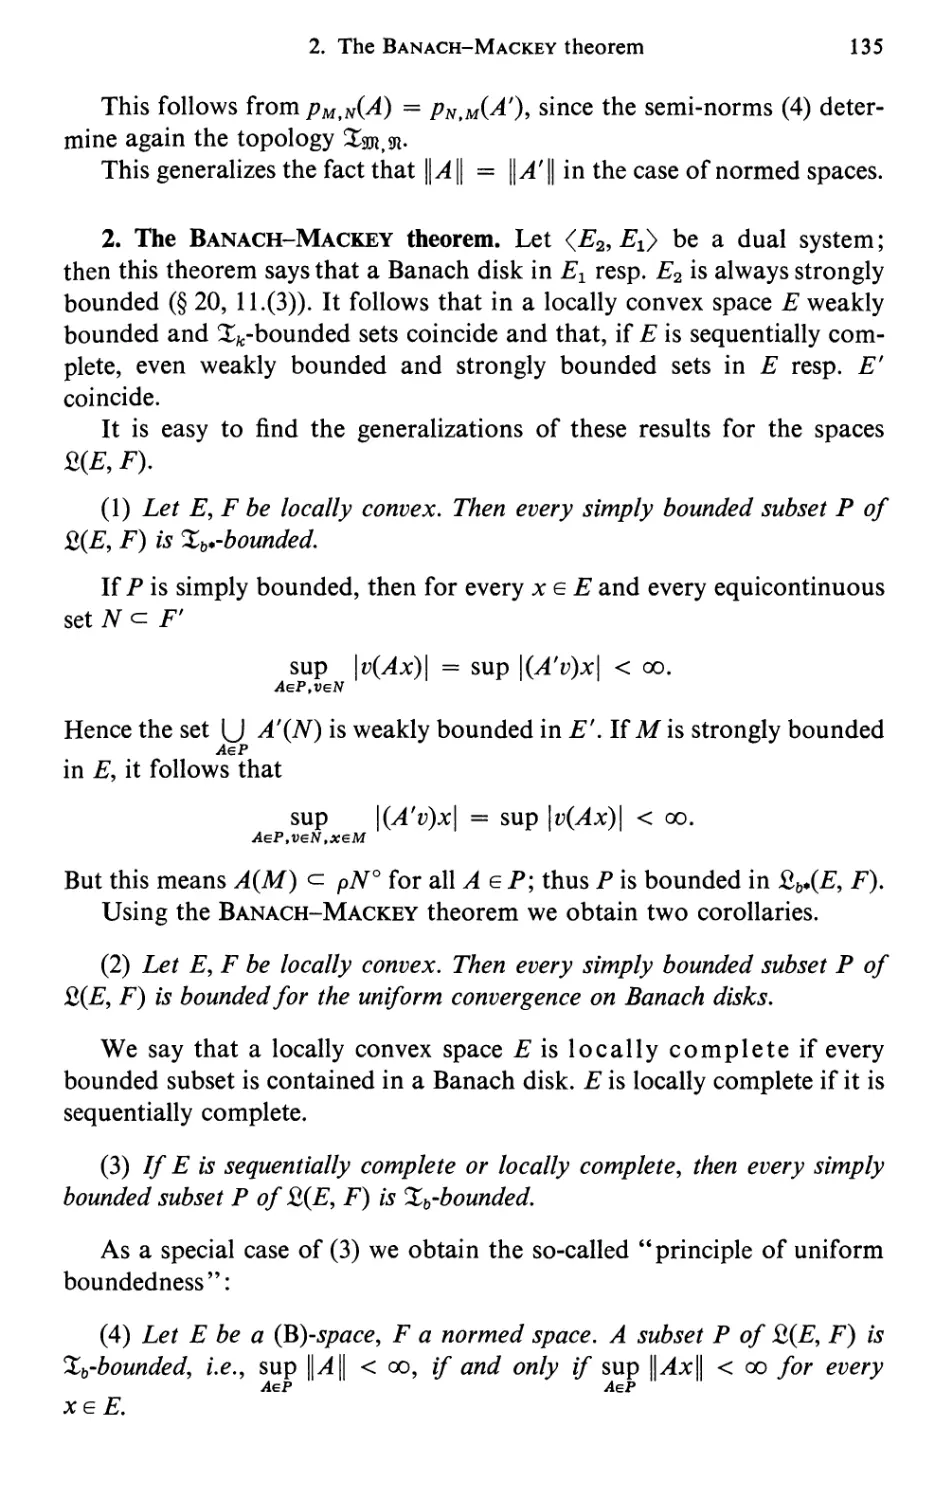 2. The Banach-Mackey theorem